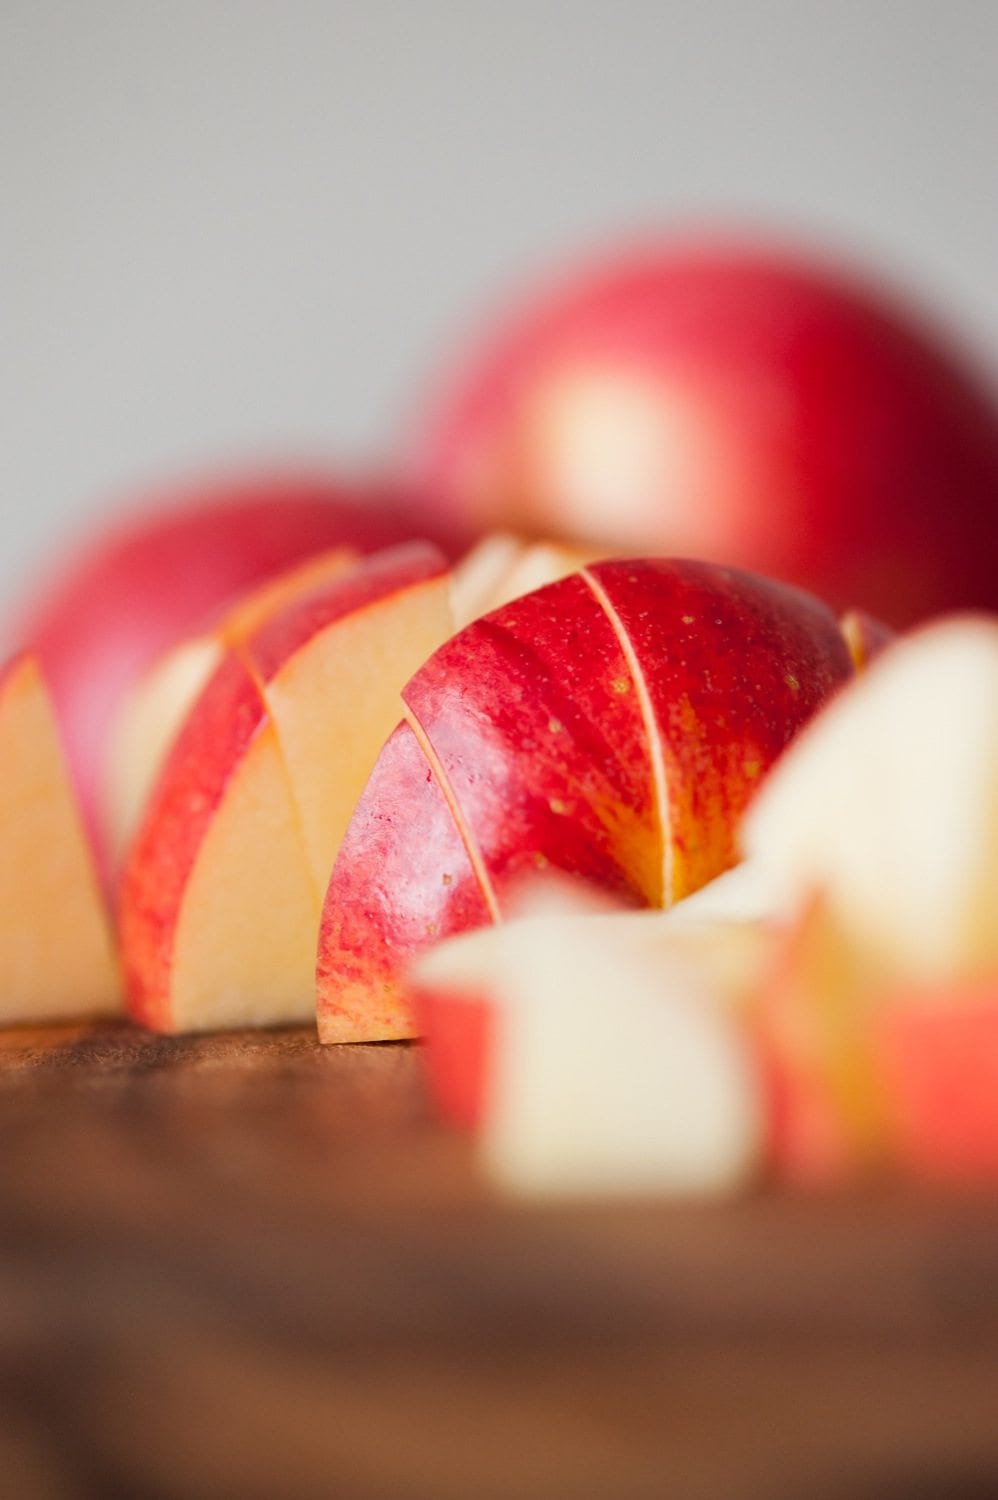 Caramel Apple Sangria Recipe from entertaining blog @cydconverse